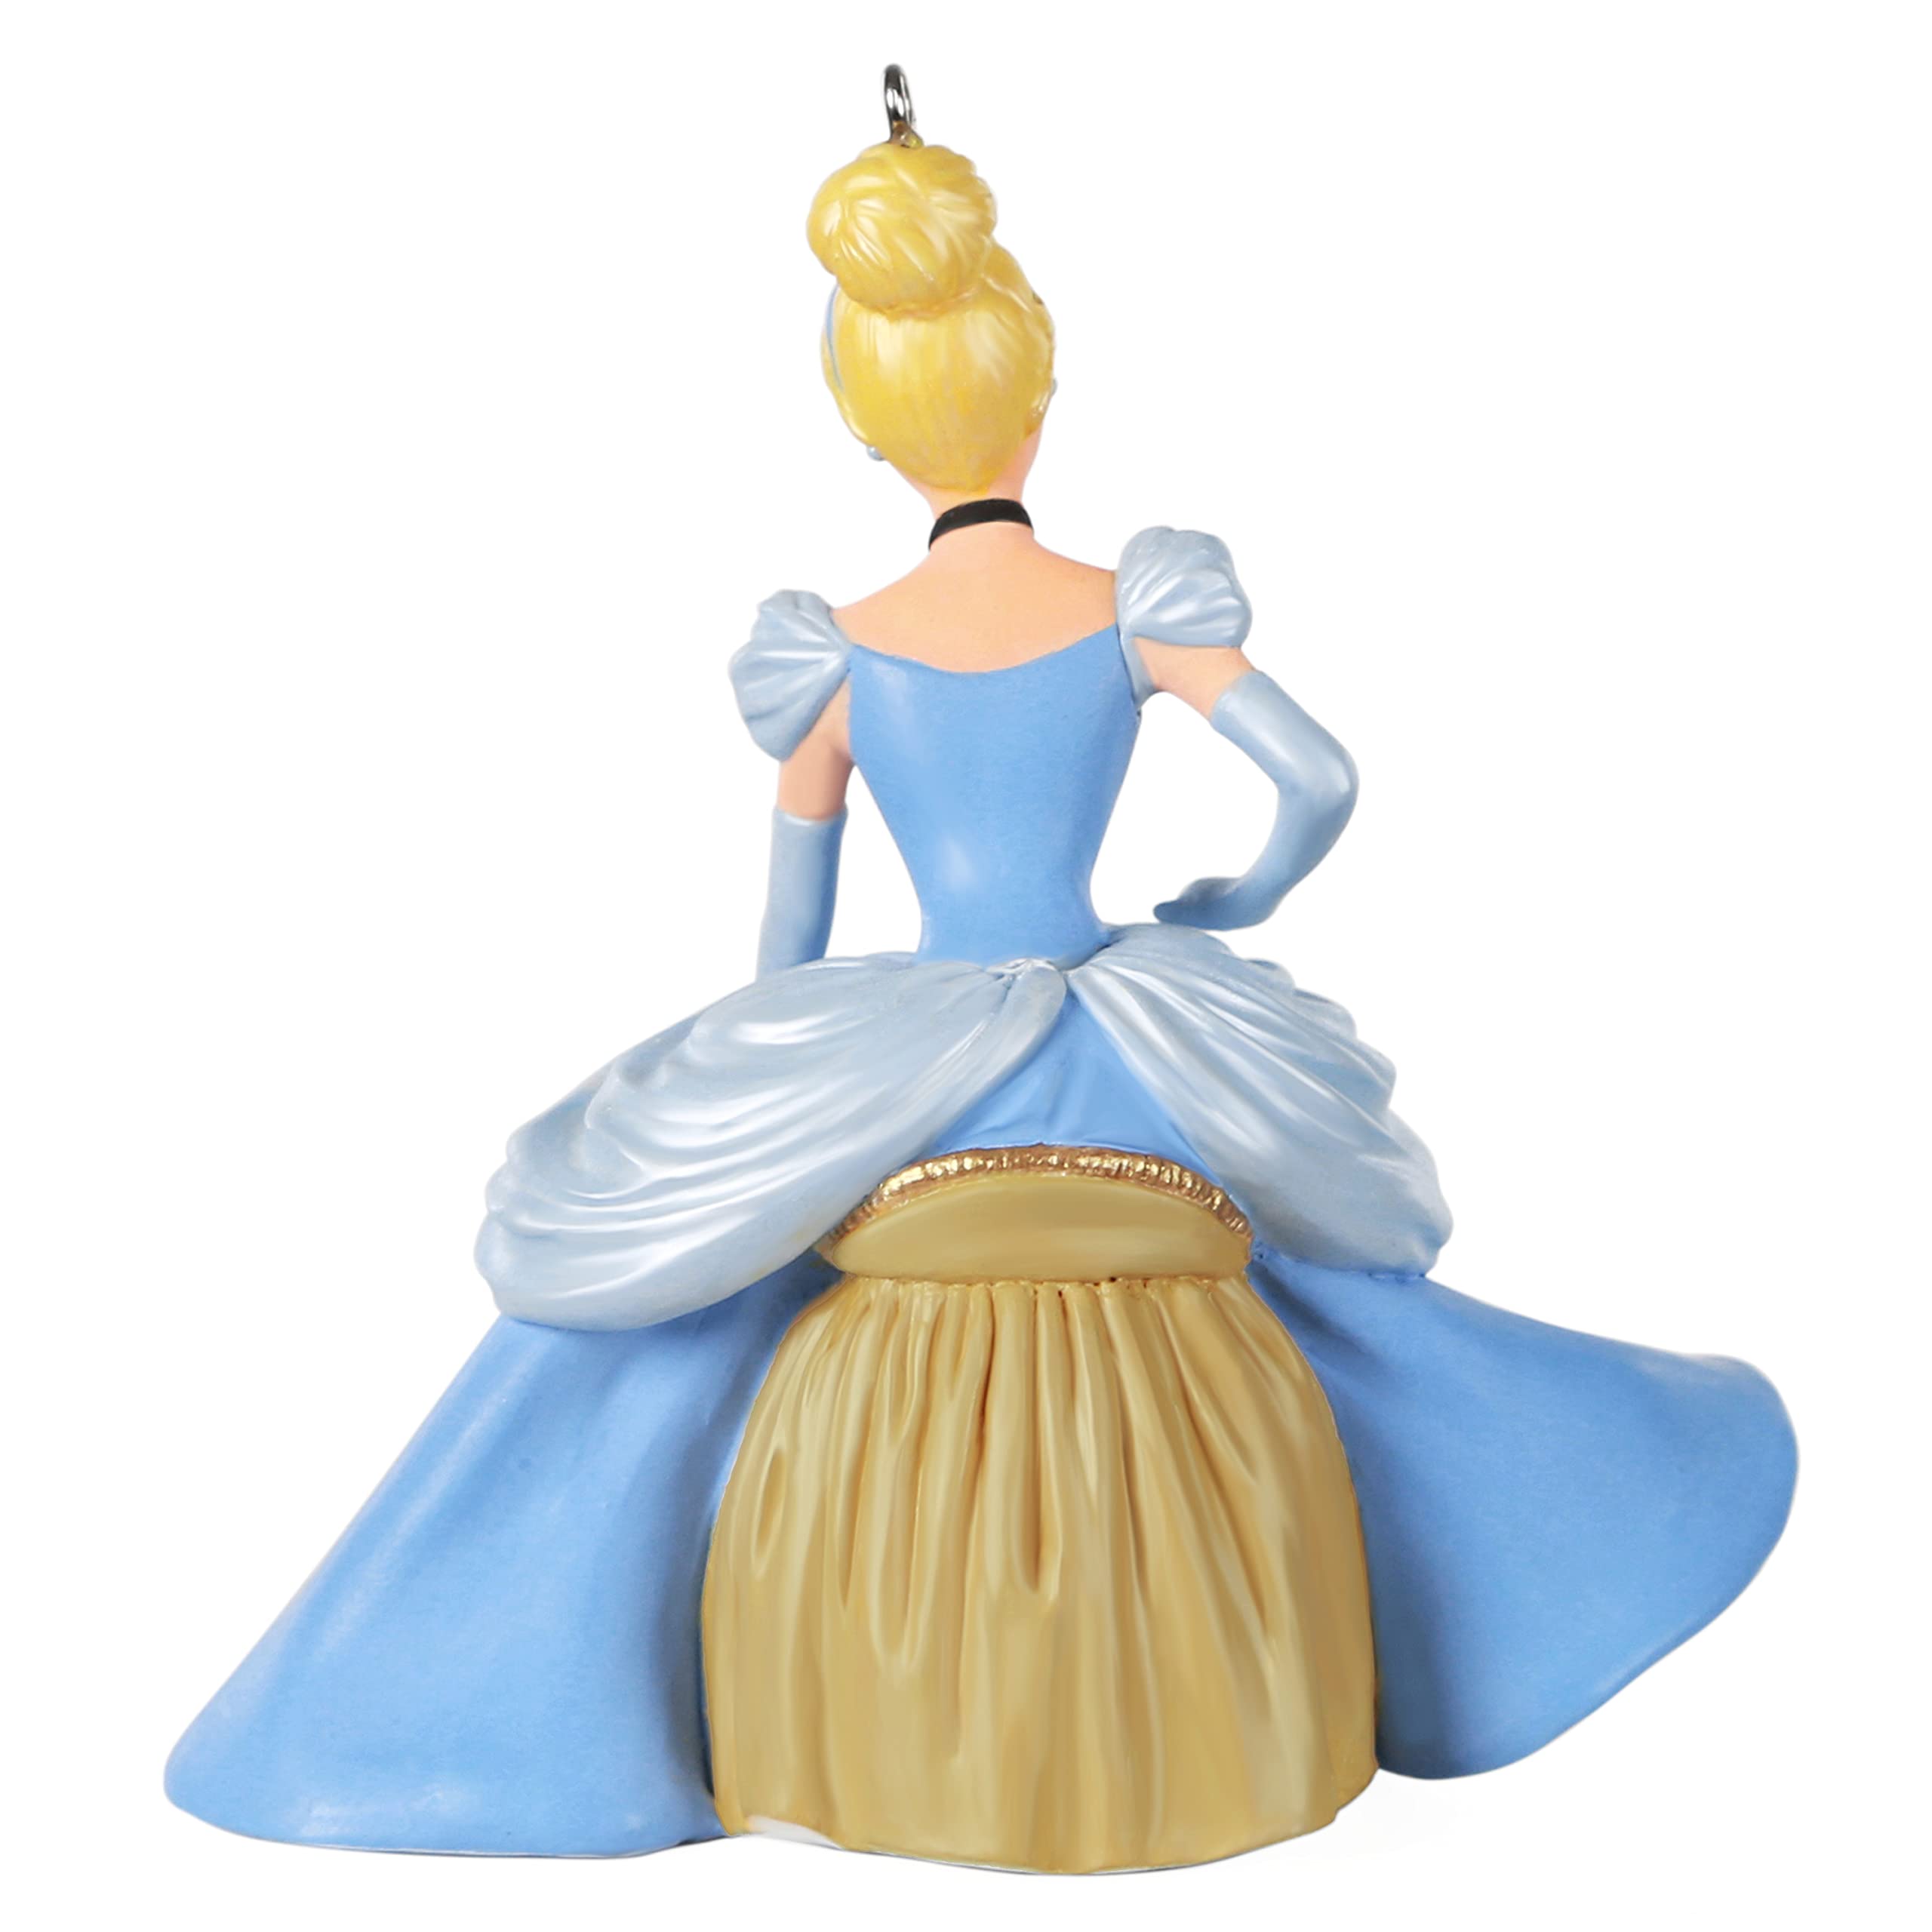 Hallmark Keepsake Christmas Ornament 2021, Disney Cinderella Stepping Out in Style